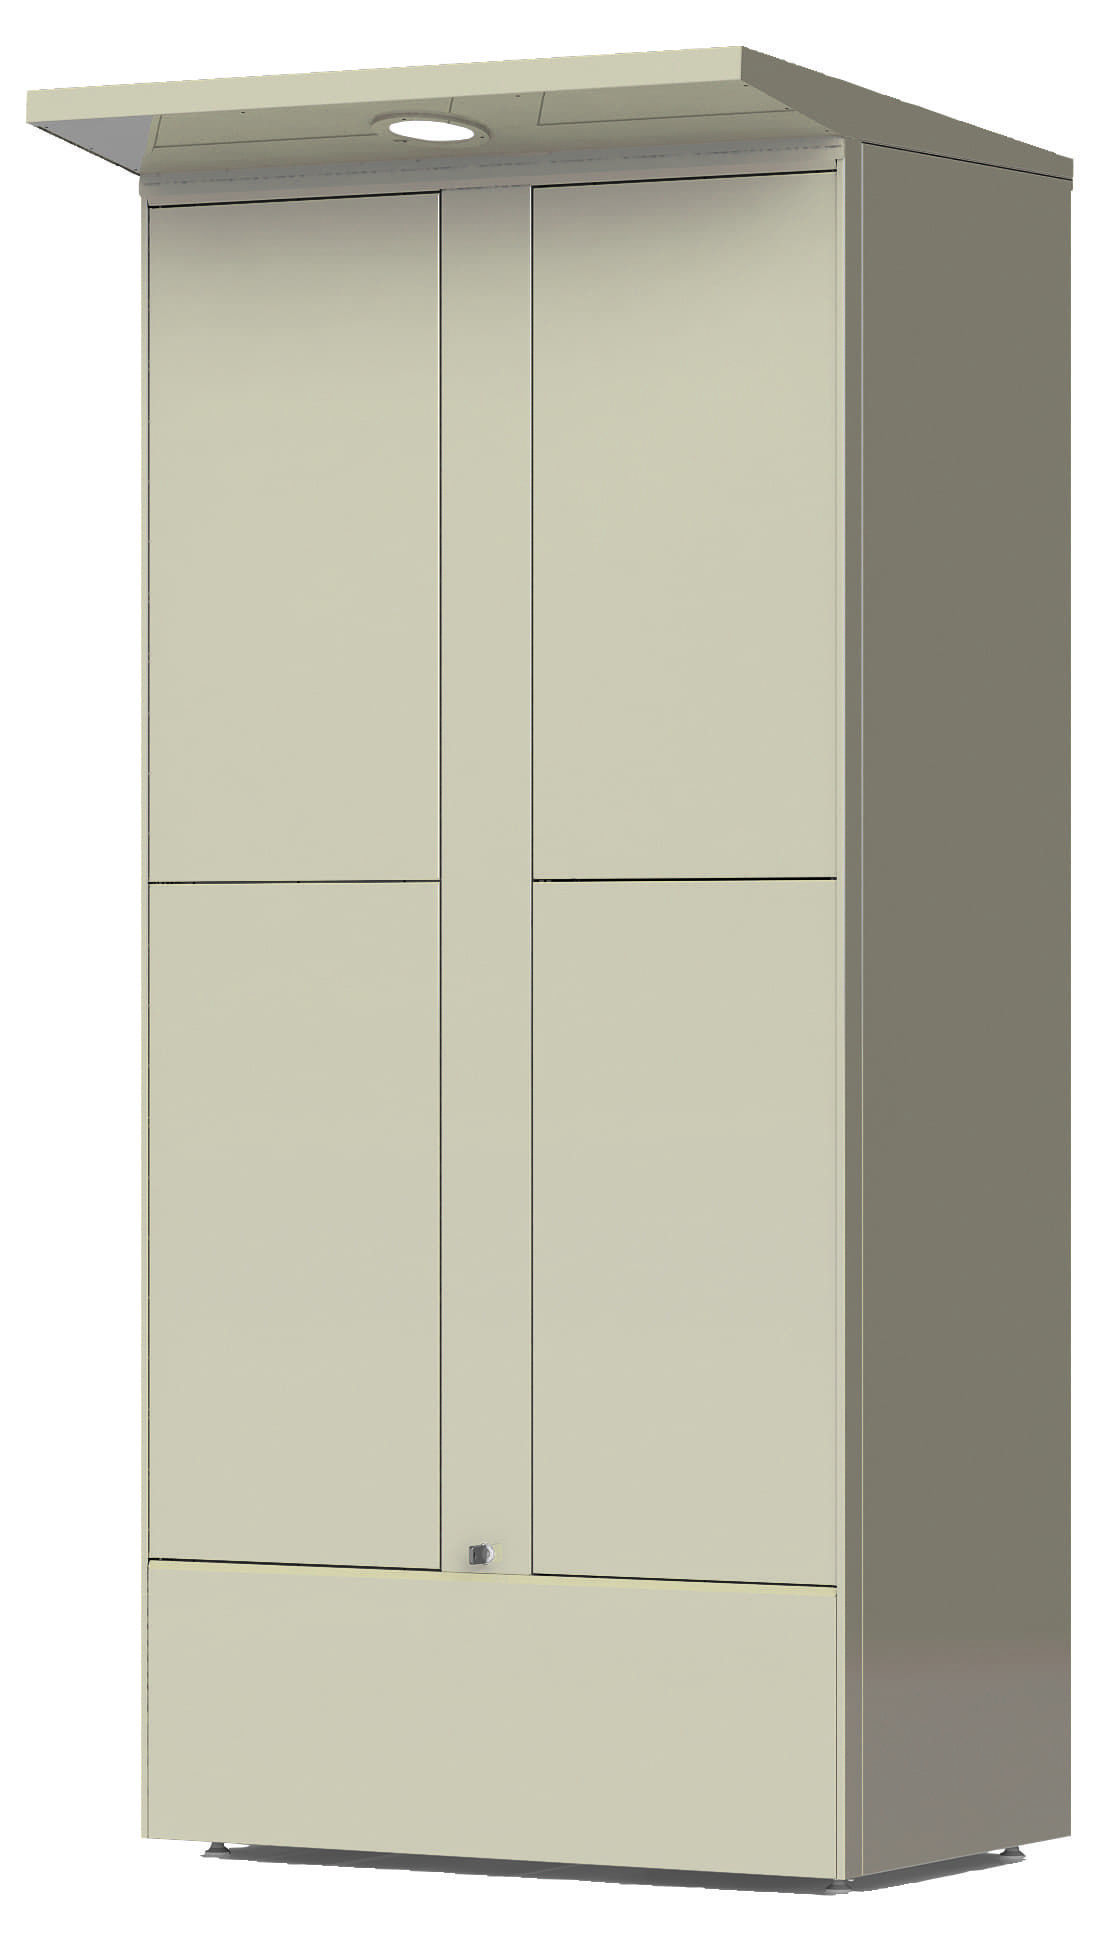 outdoor dry cleaning locker module